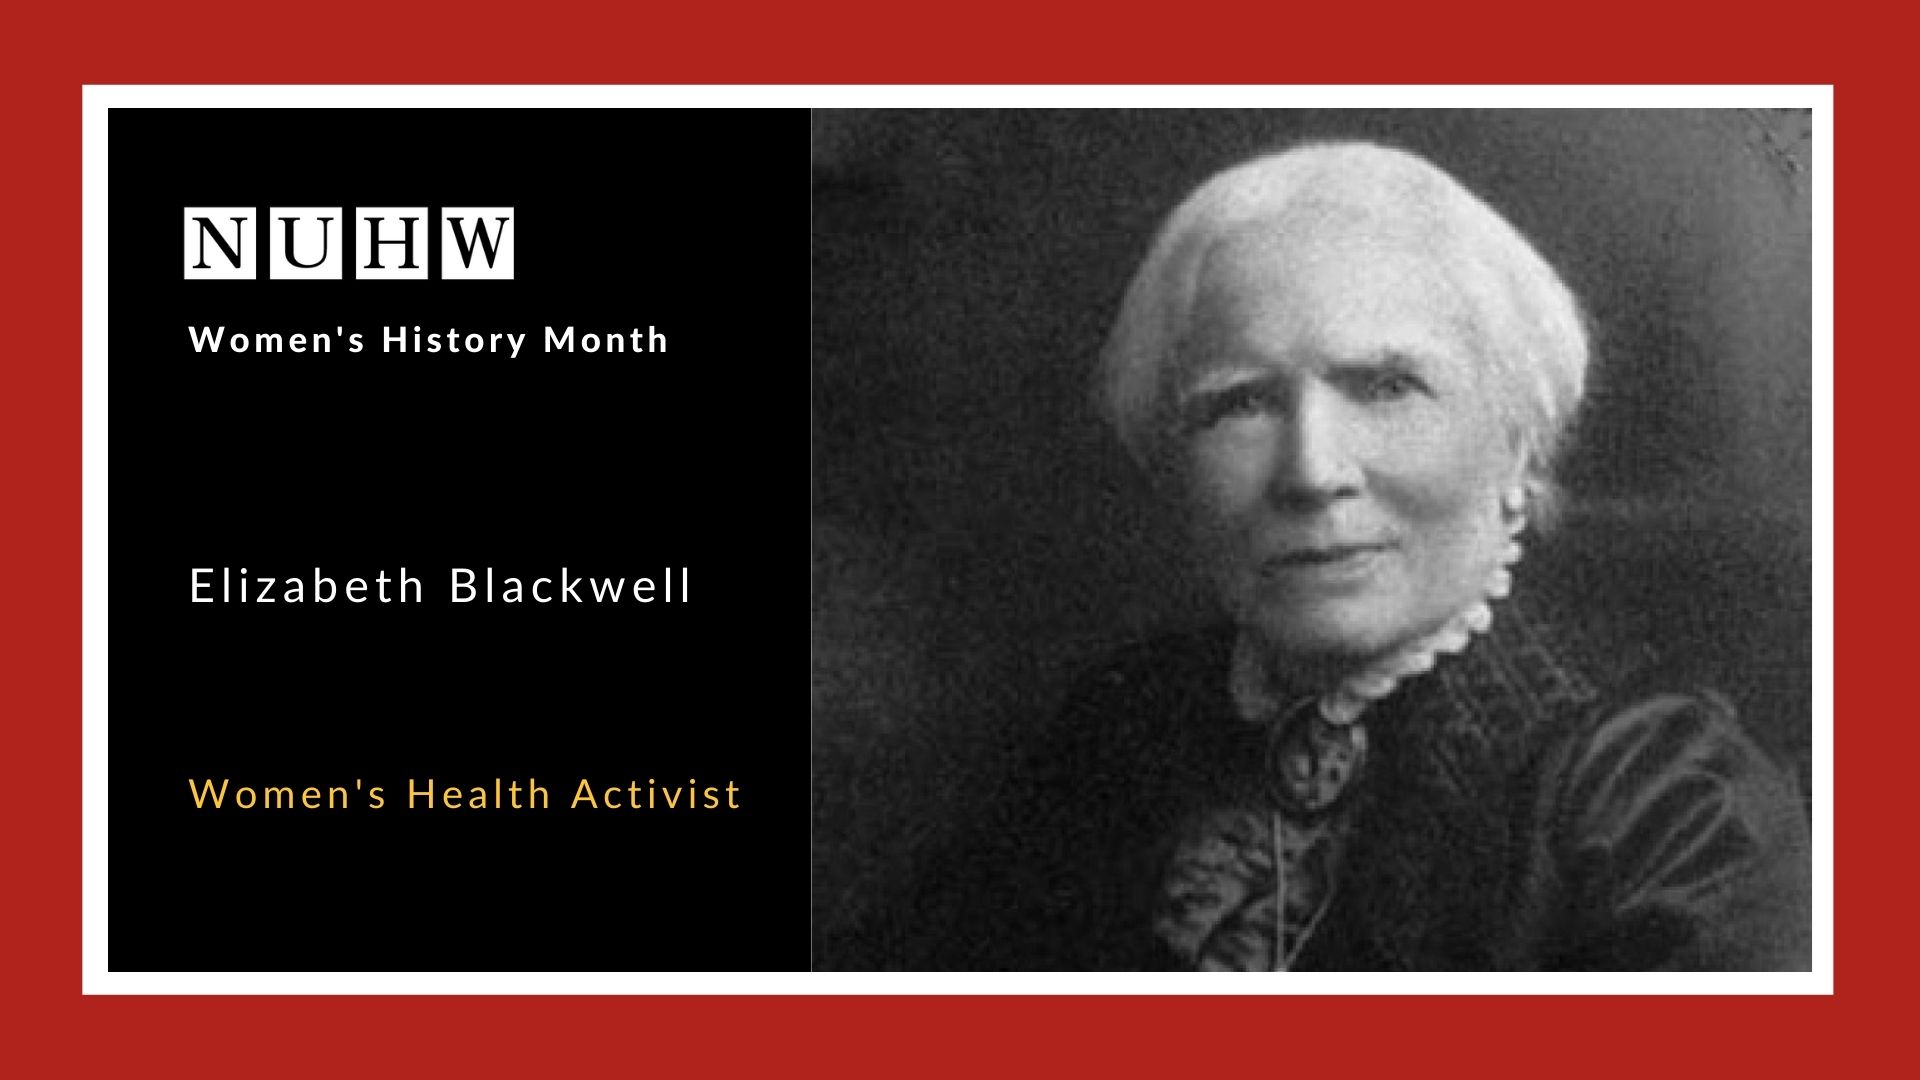 Elizabeth Blackwell: One woman play as part of Public Health Week, News